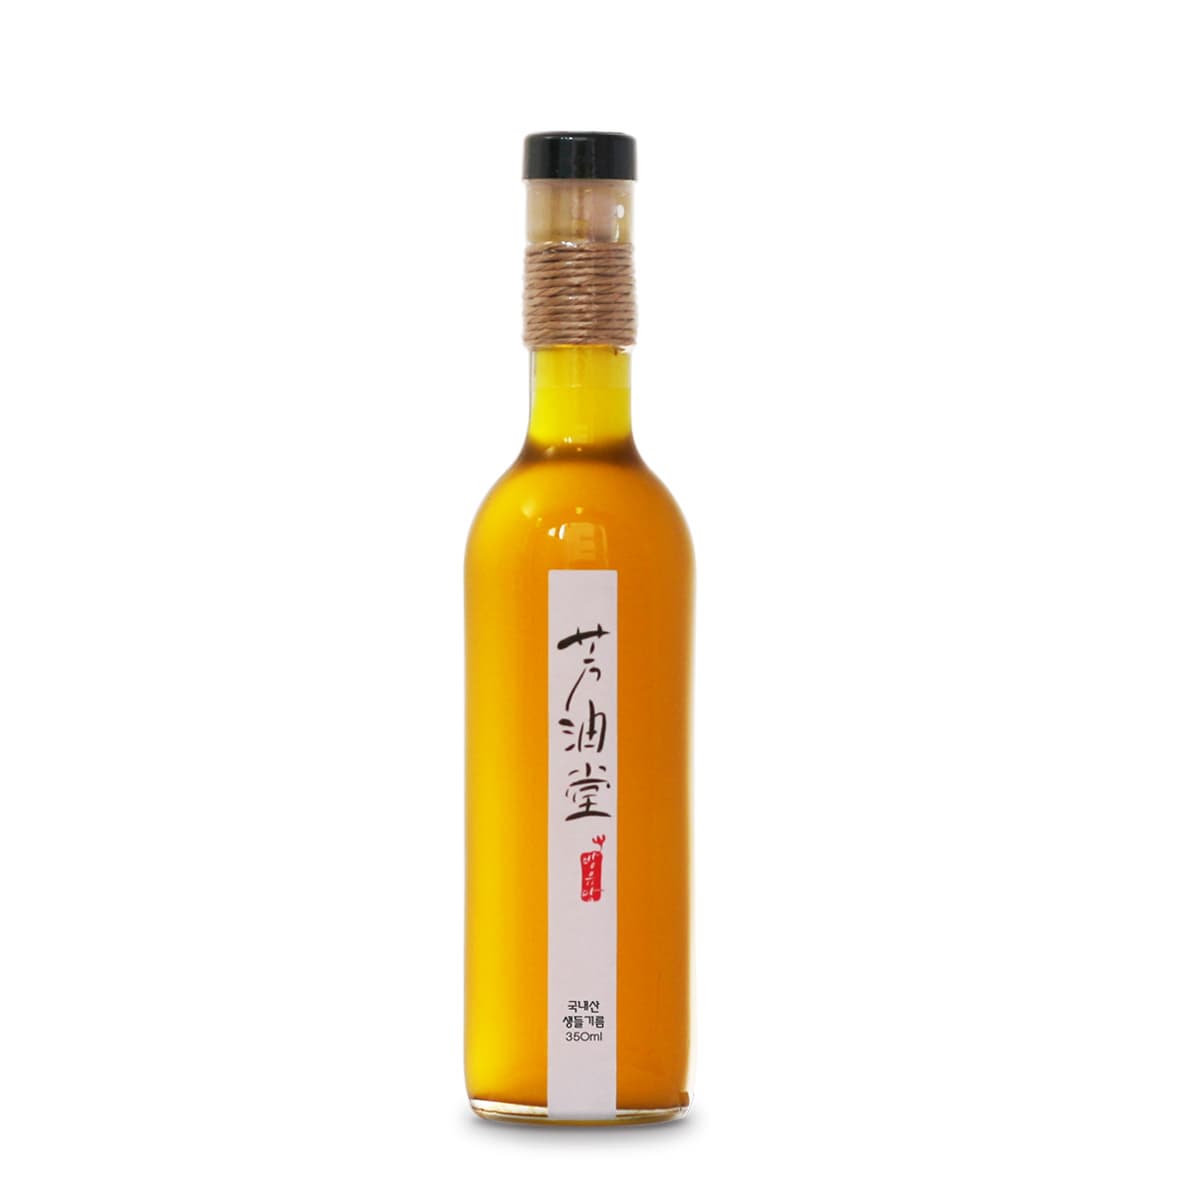 Bangyudang Made in Korea Premium Unroasted Perilla Oil